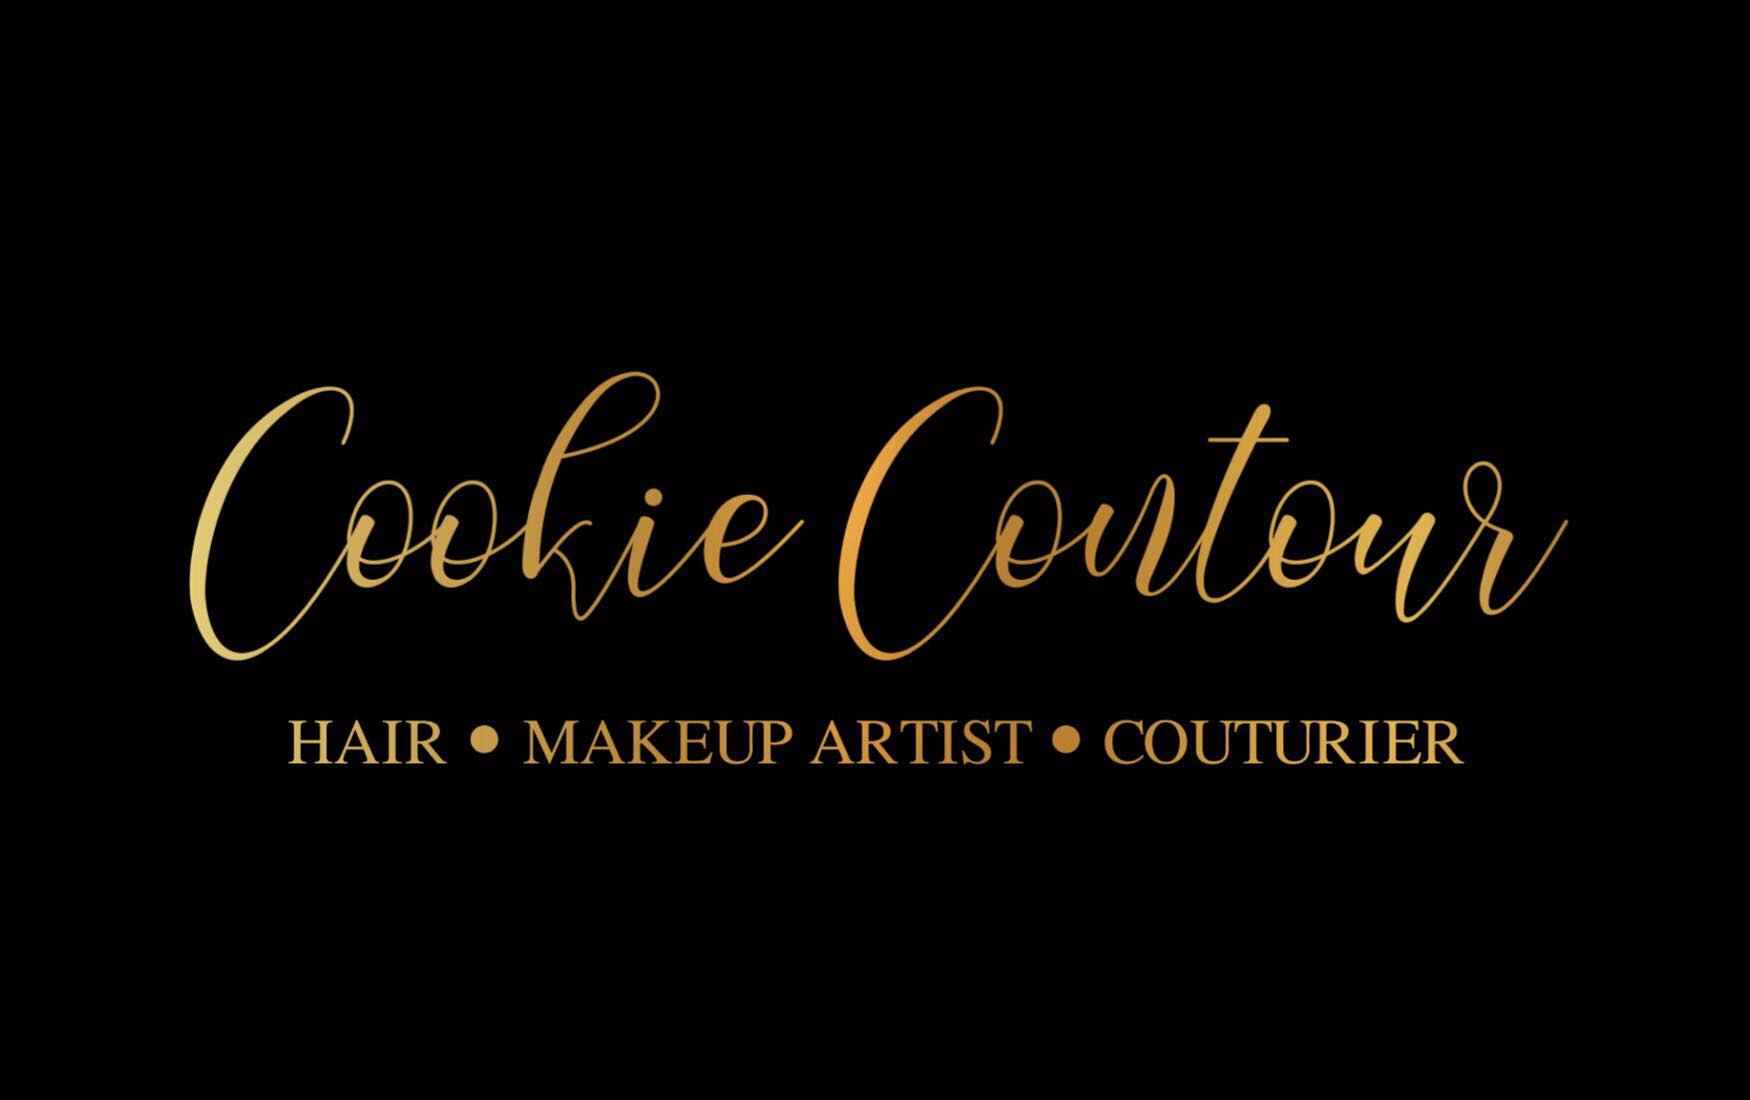 Cookie Contour logo